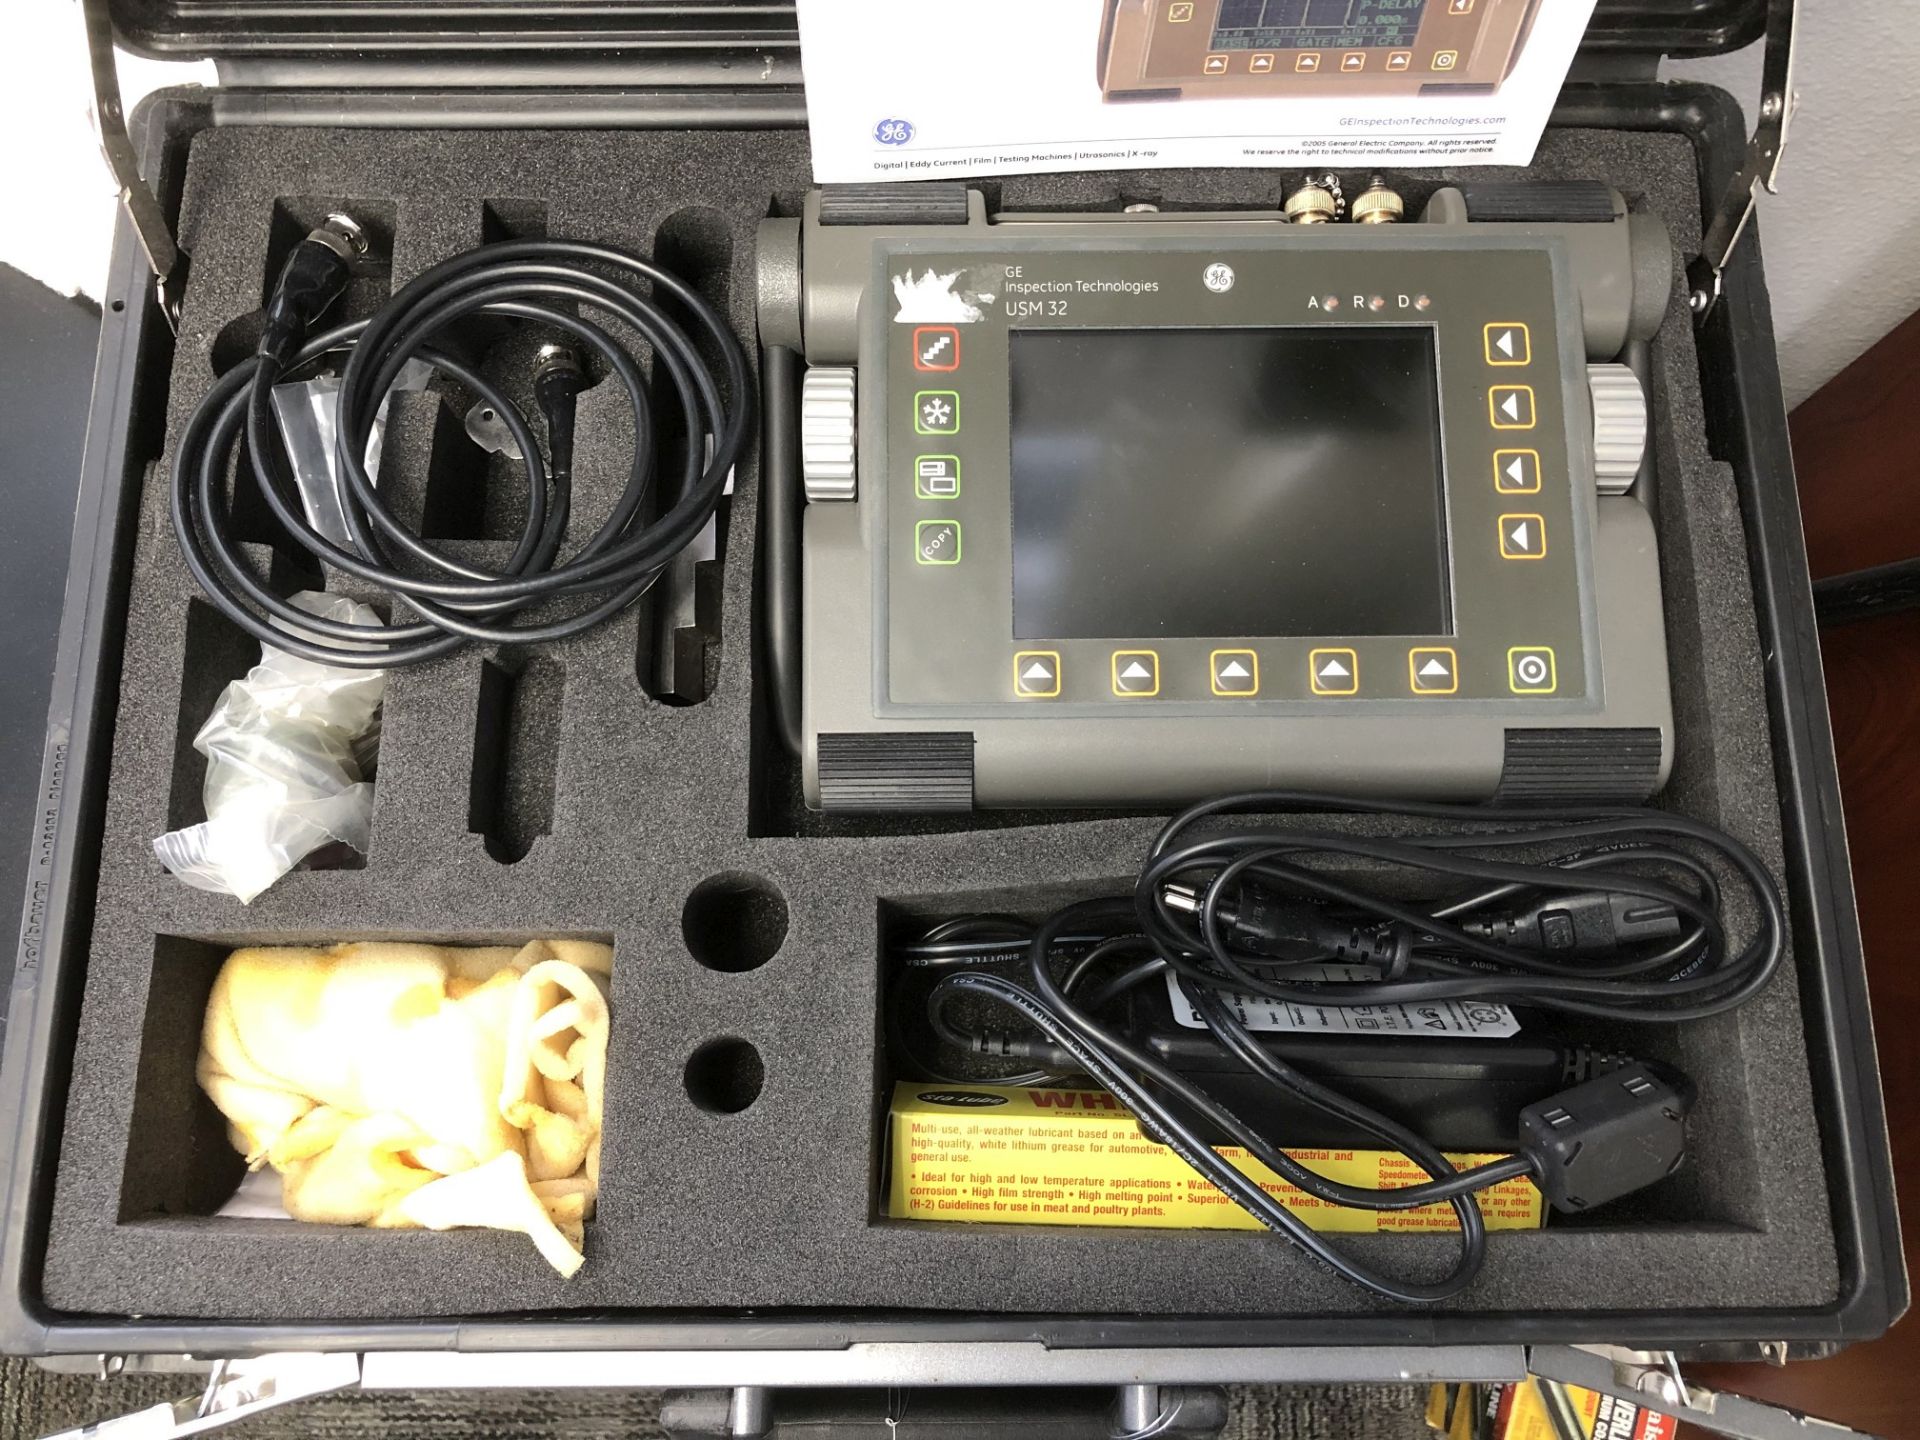 GE Inspection Technologies USM 32 Ultrasonic Flaw Detector - Image 2 of 3